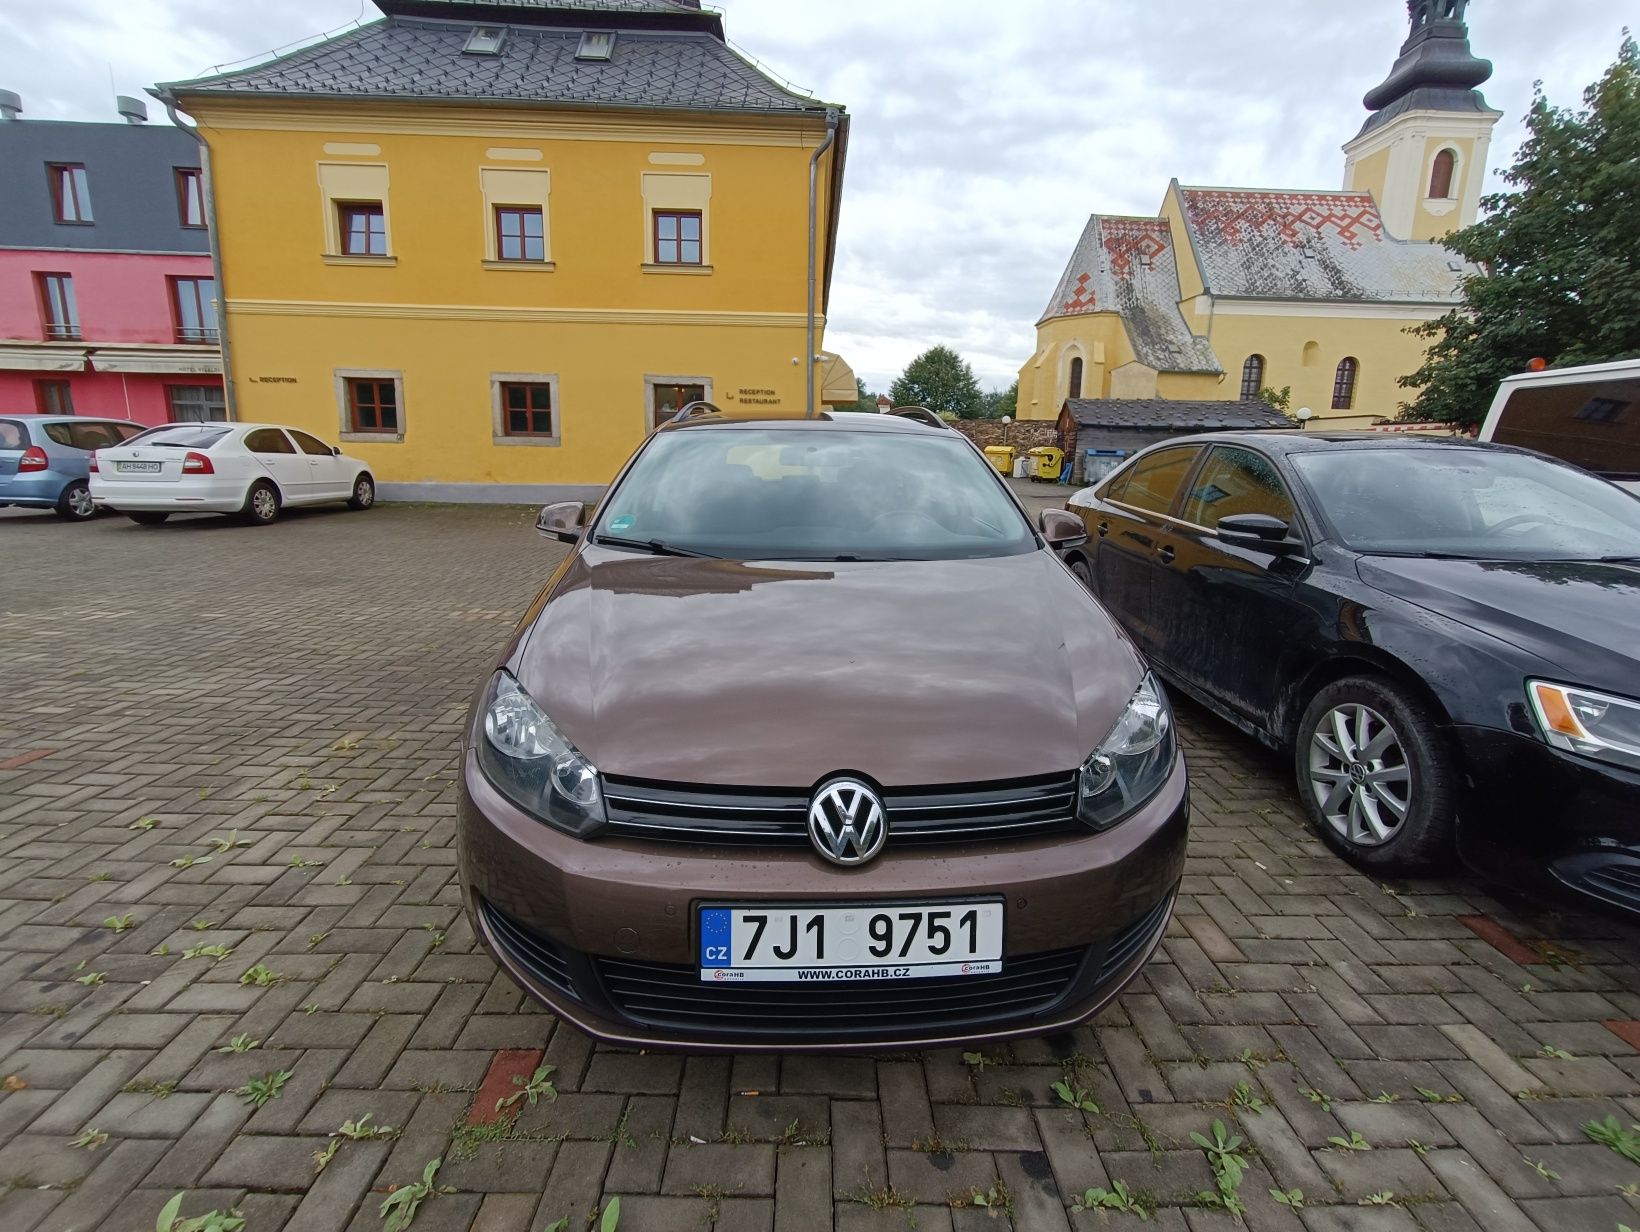 Volkswagen Golf VI 2011 авто из Германии в пути